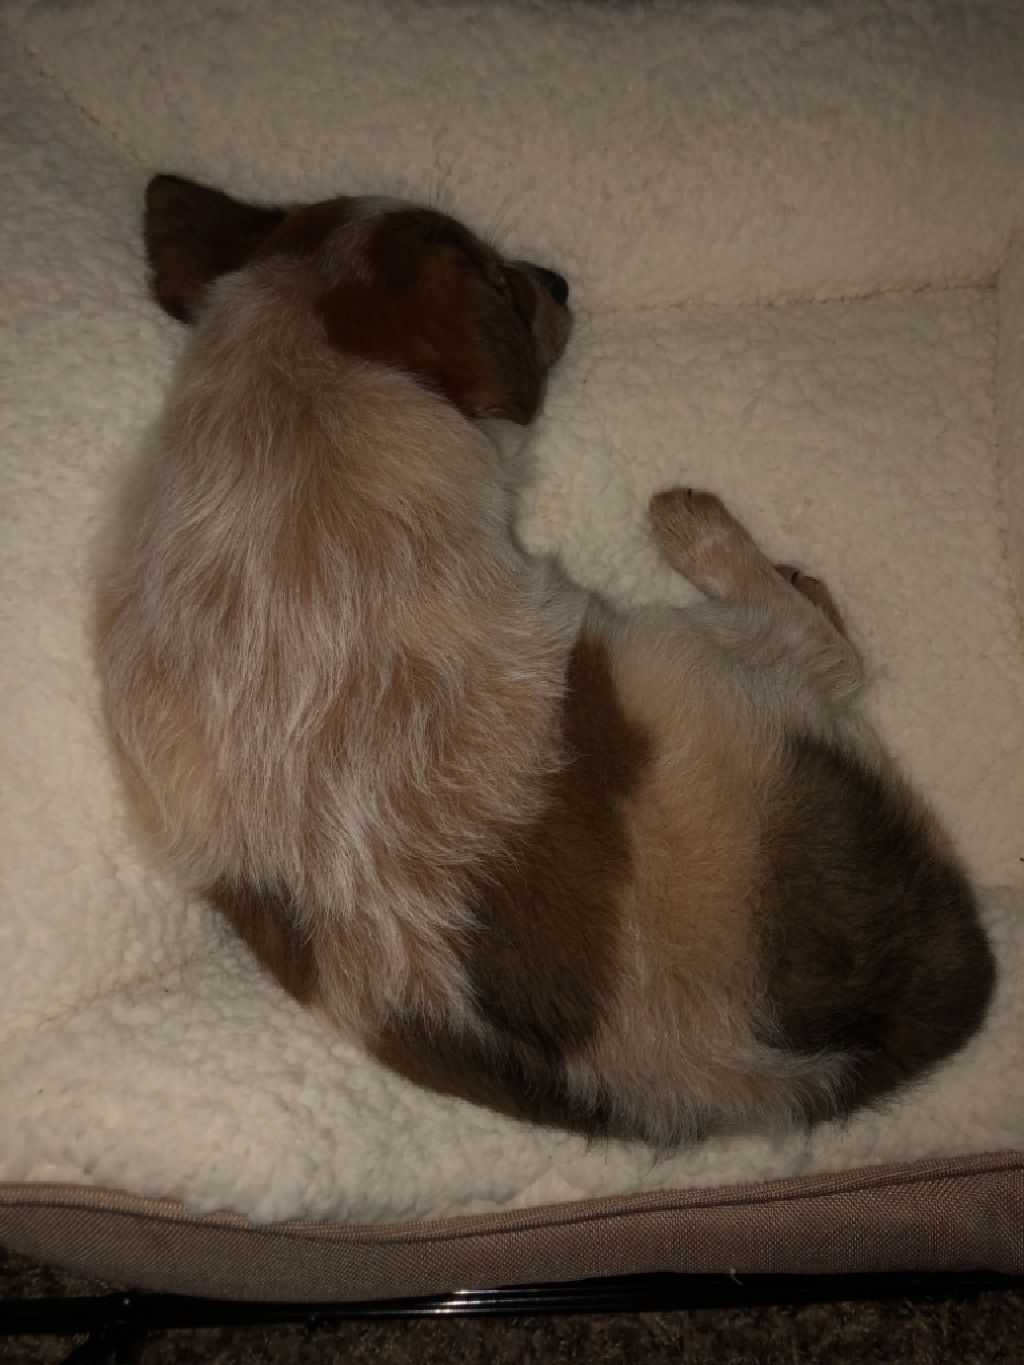 Corgi Red Heeler Mix - Pottstown Dogs for Sale or Adoption Offered - Claz.org